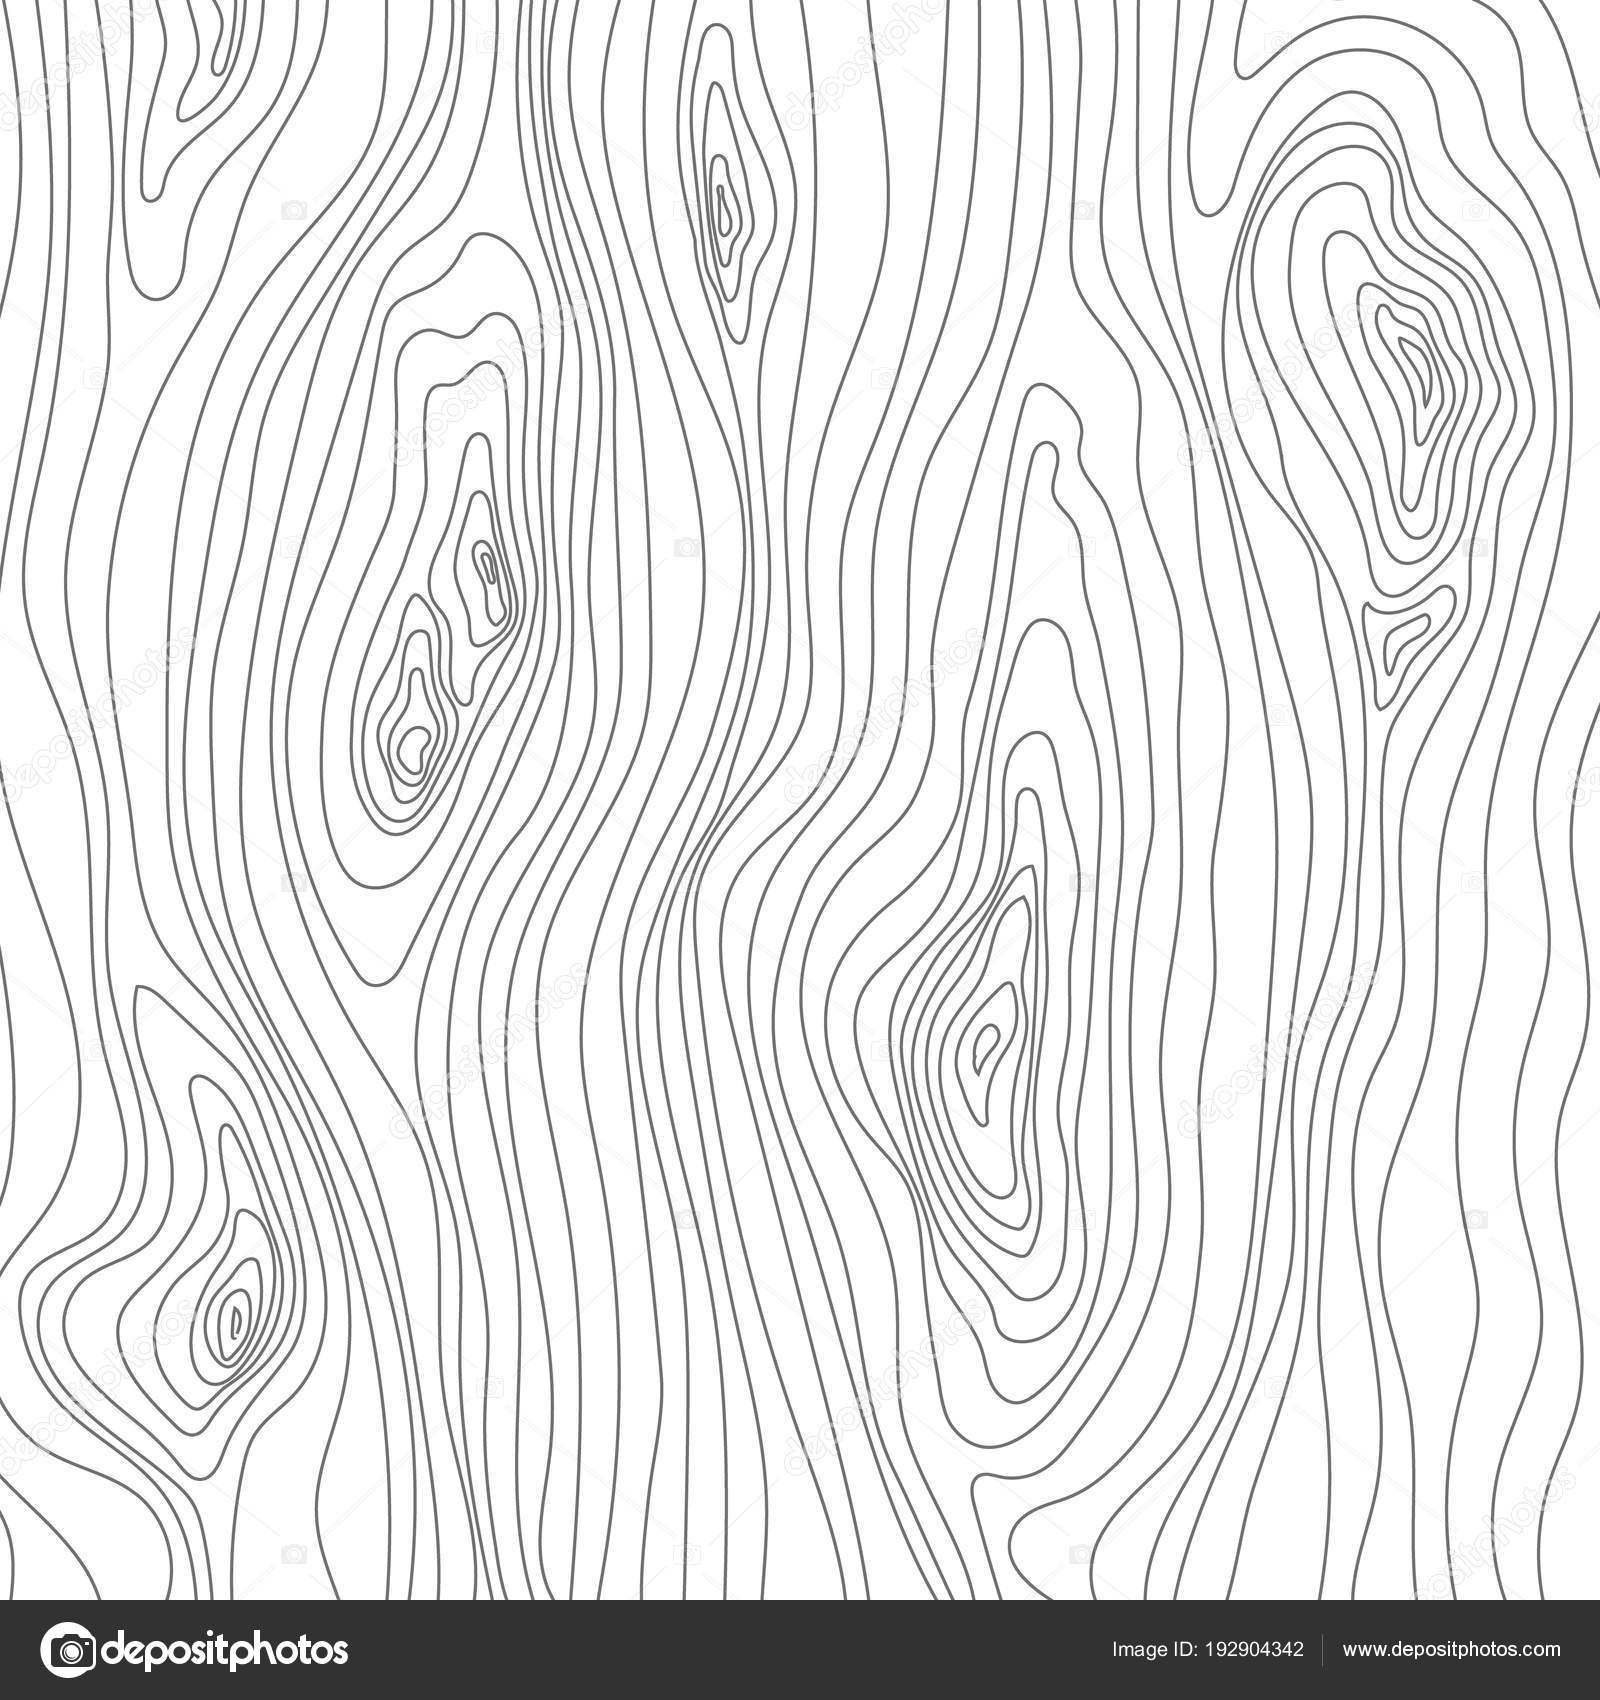 Wood Texture Sketch. Grain cover surface. Wooden fibers. Vector ...